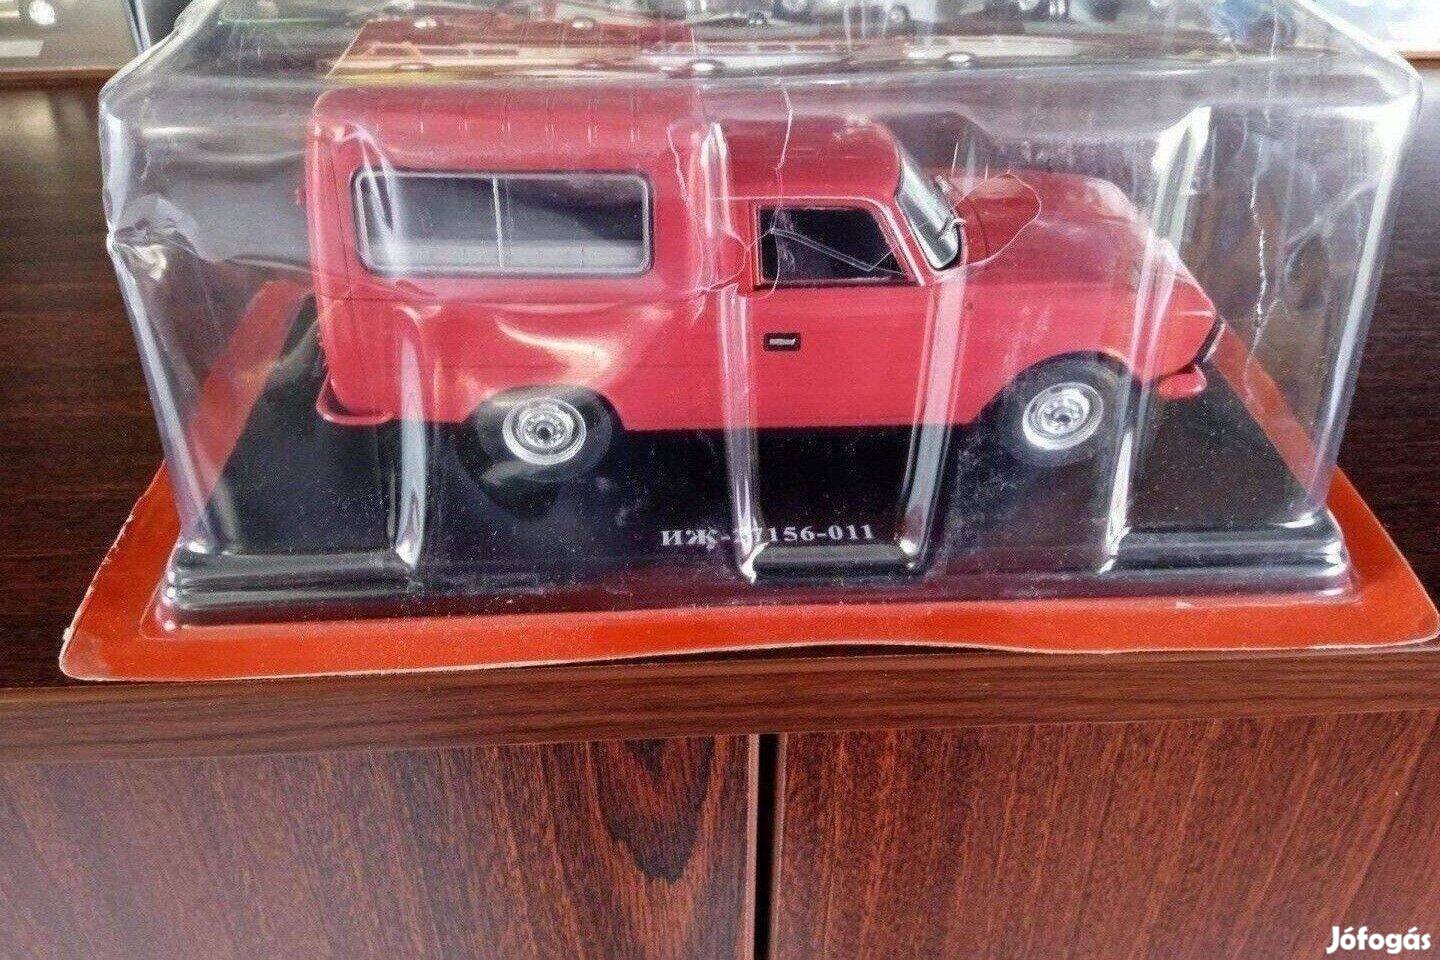 Izs 27156-011 piros kisauto modell 1/24 Eladó